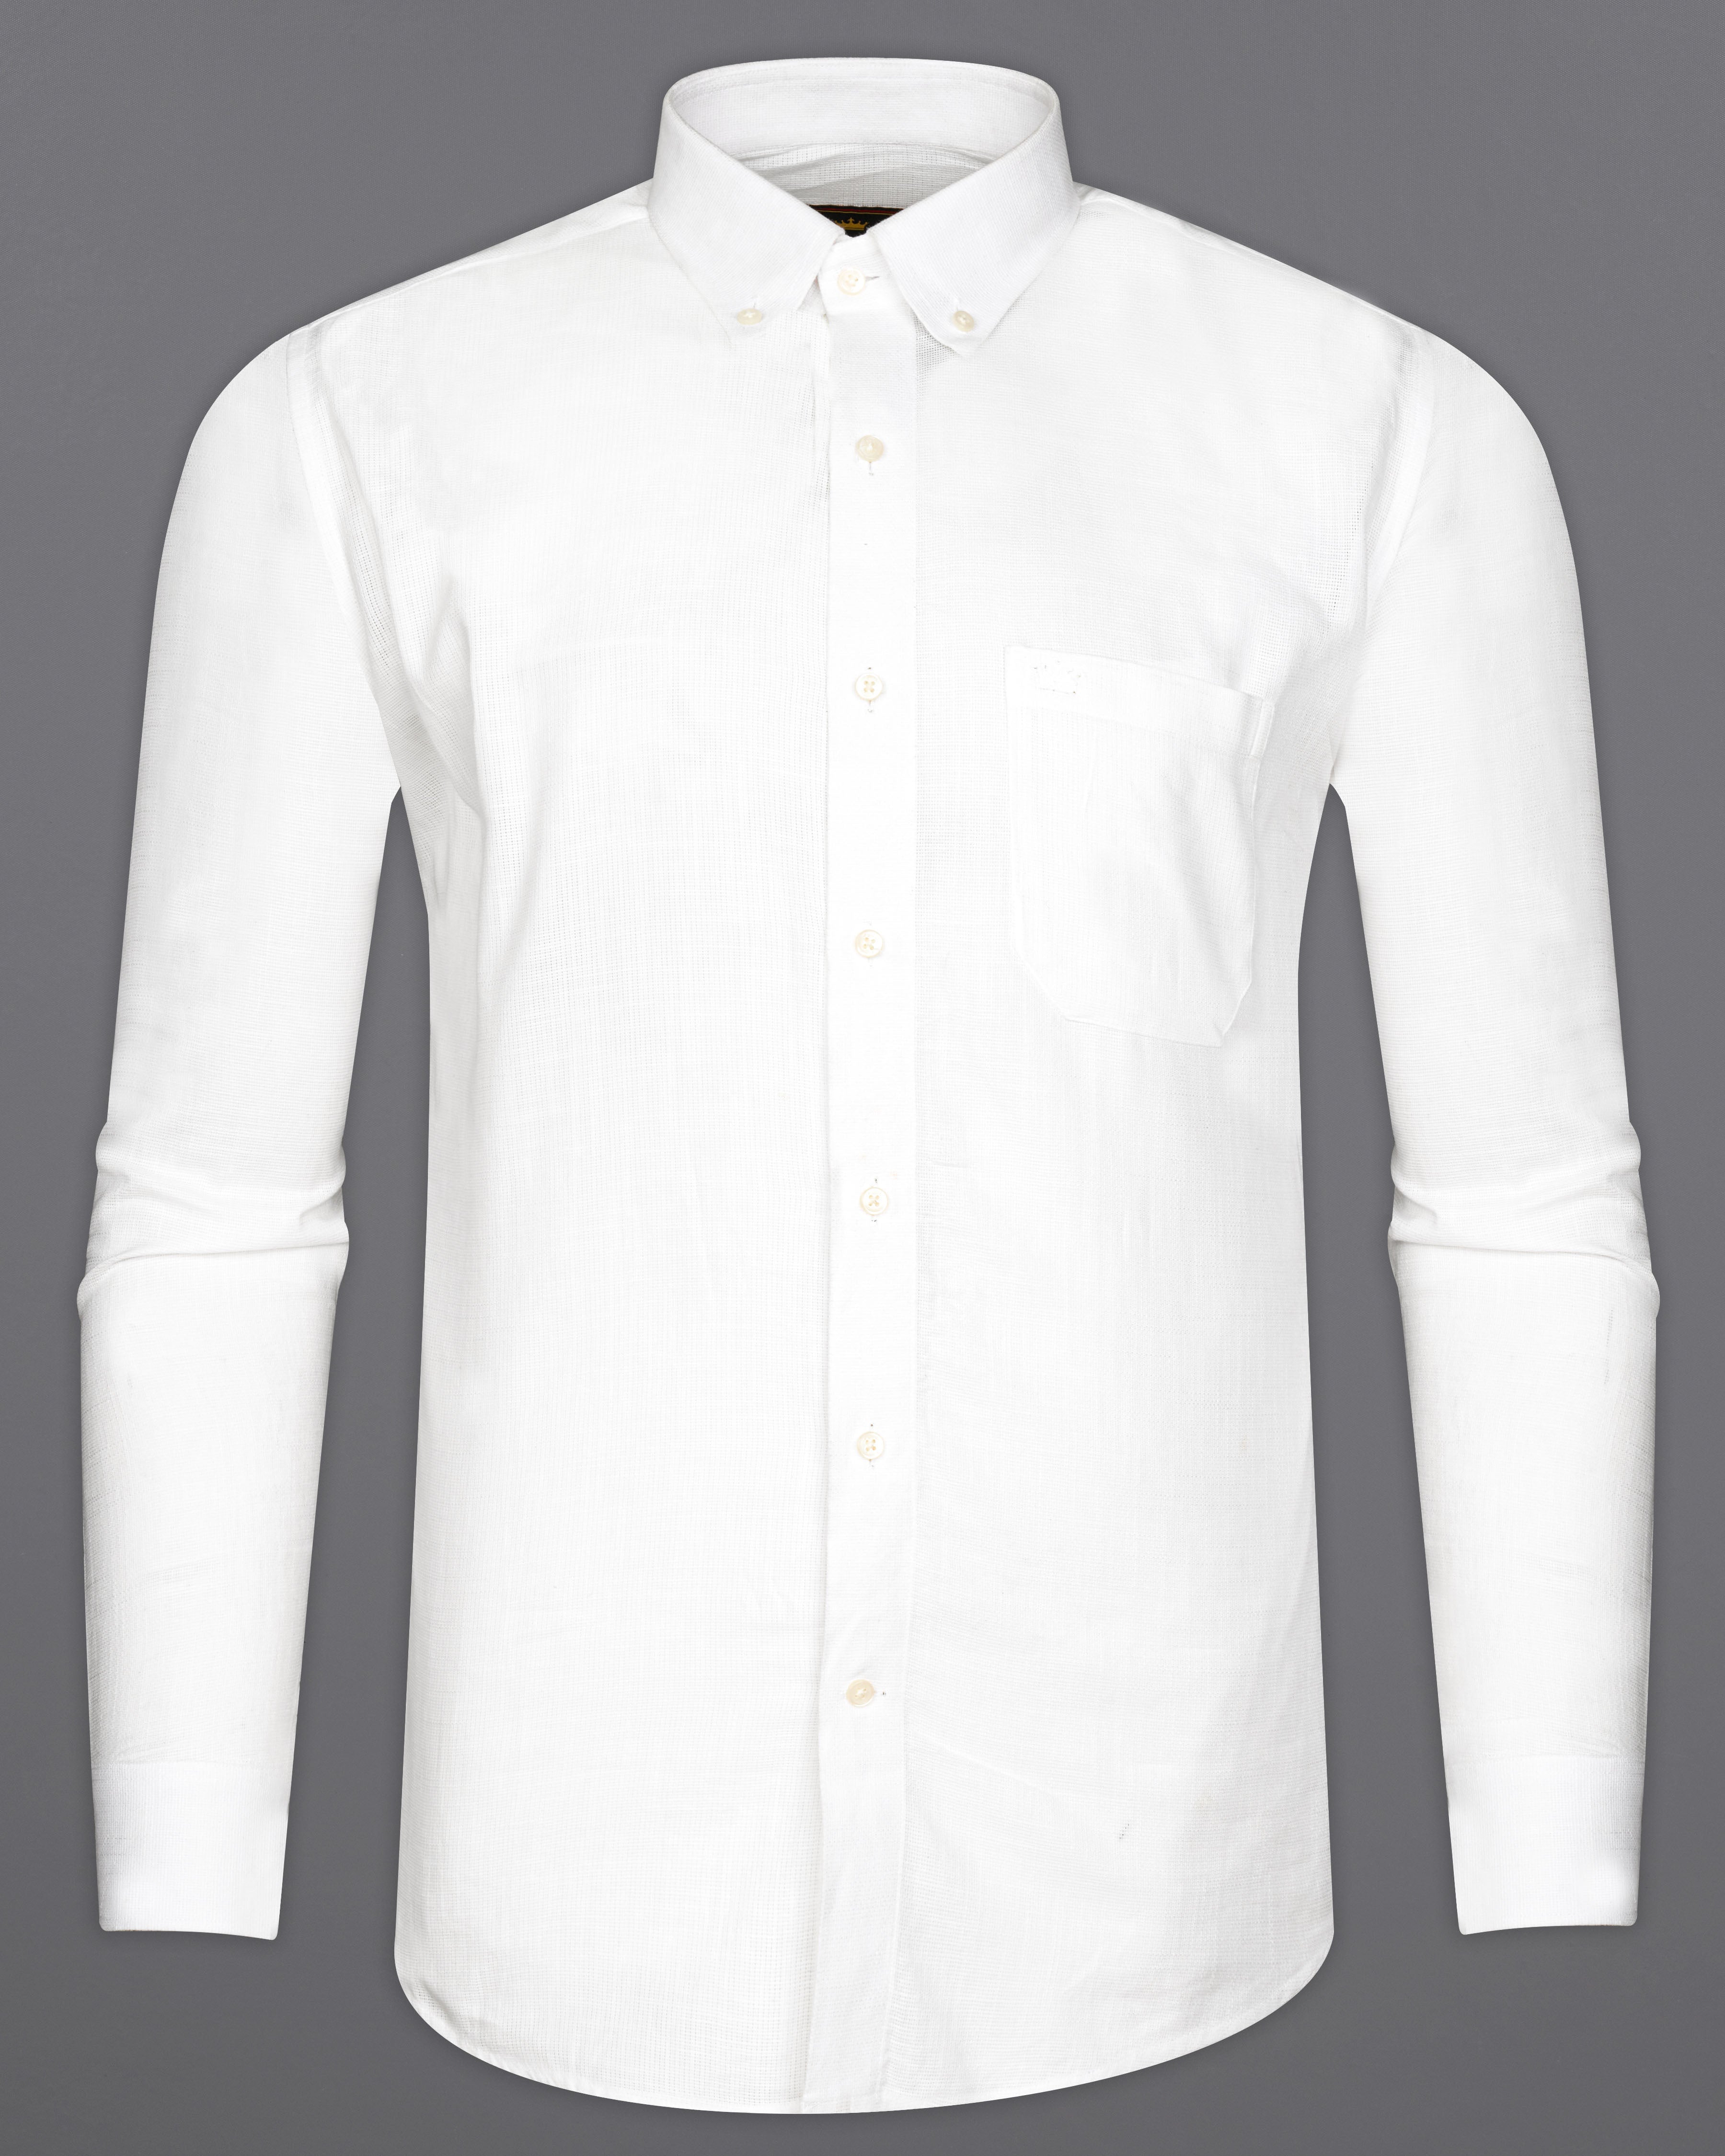 Bright White Traditional Hand Embroidered Dobby Premium Giza Cotton Shirt 6103-BD-E060-38, 6103-BD-E060-H-38, 6103-BD-E060-39, 6103-BD-E060-H-39, 6103-BD-E060-40, 6103-BD-E060-H-40, 6103-BD-E060-42, 6103-BD-E060-H-42, 6103-BD-E060-44, 6103-BD-E060-H-44, 6103-BD-E060-46, 6103-BD-E060-H-46, 6103-BD-E060-48, 6103-BD-E060-H-48, 6103-BD-E060-50, 6103-BD-E060-H-50, 6103-BD-E060-52, 6103-BD-E060-H-52